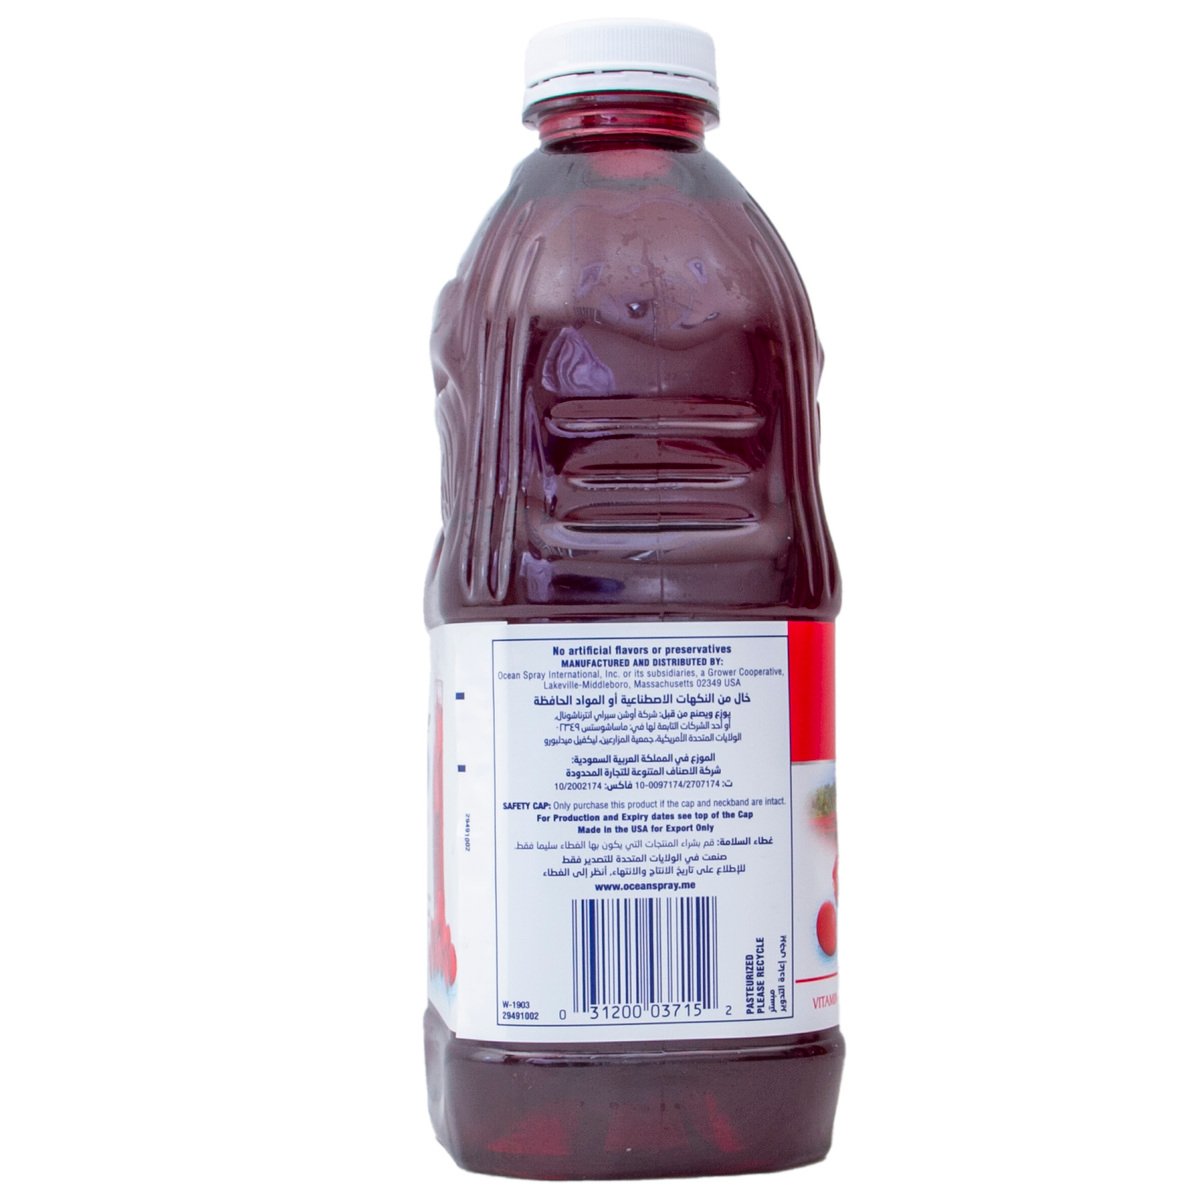 Ocean Spray Cranberry Classic Juice Drink 64 oz